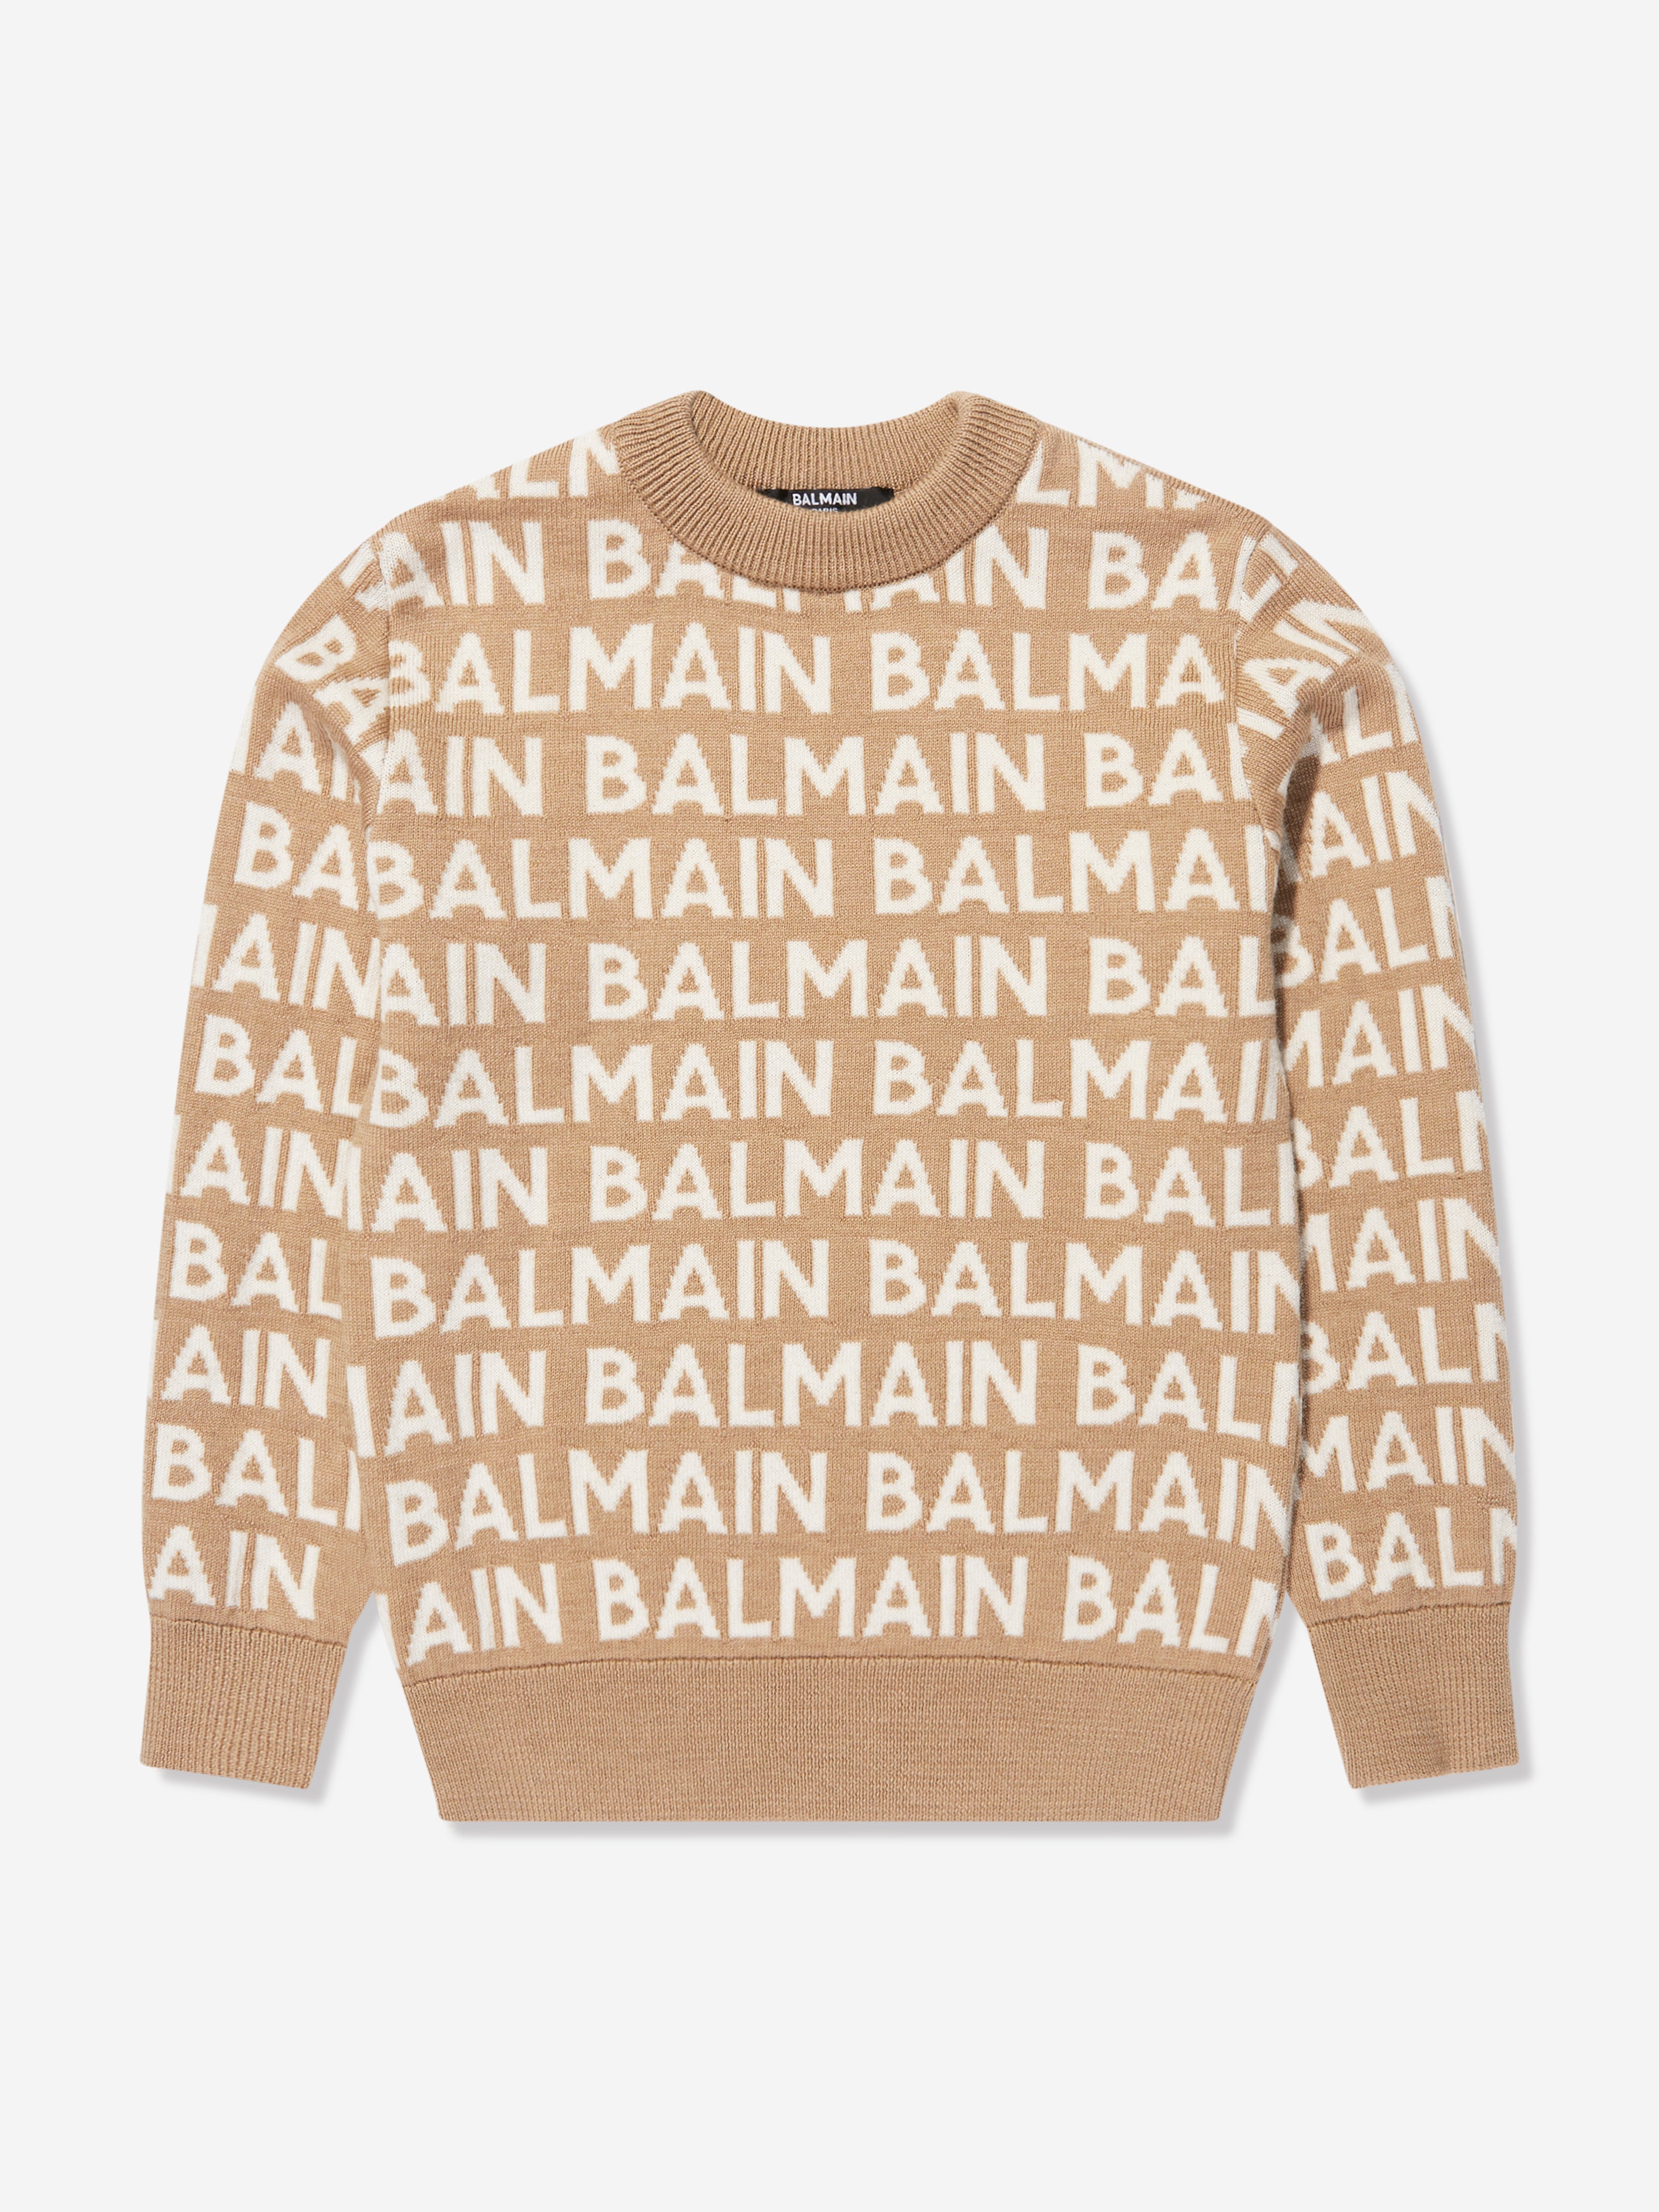 Balmain Boys Knit Jumper in Brown | Childsplay Clothing